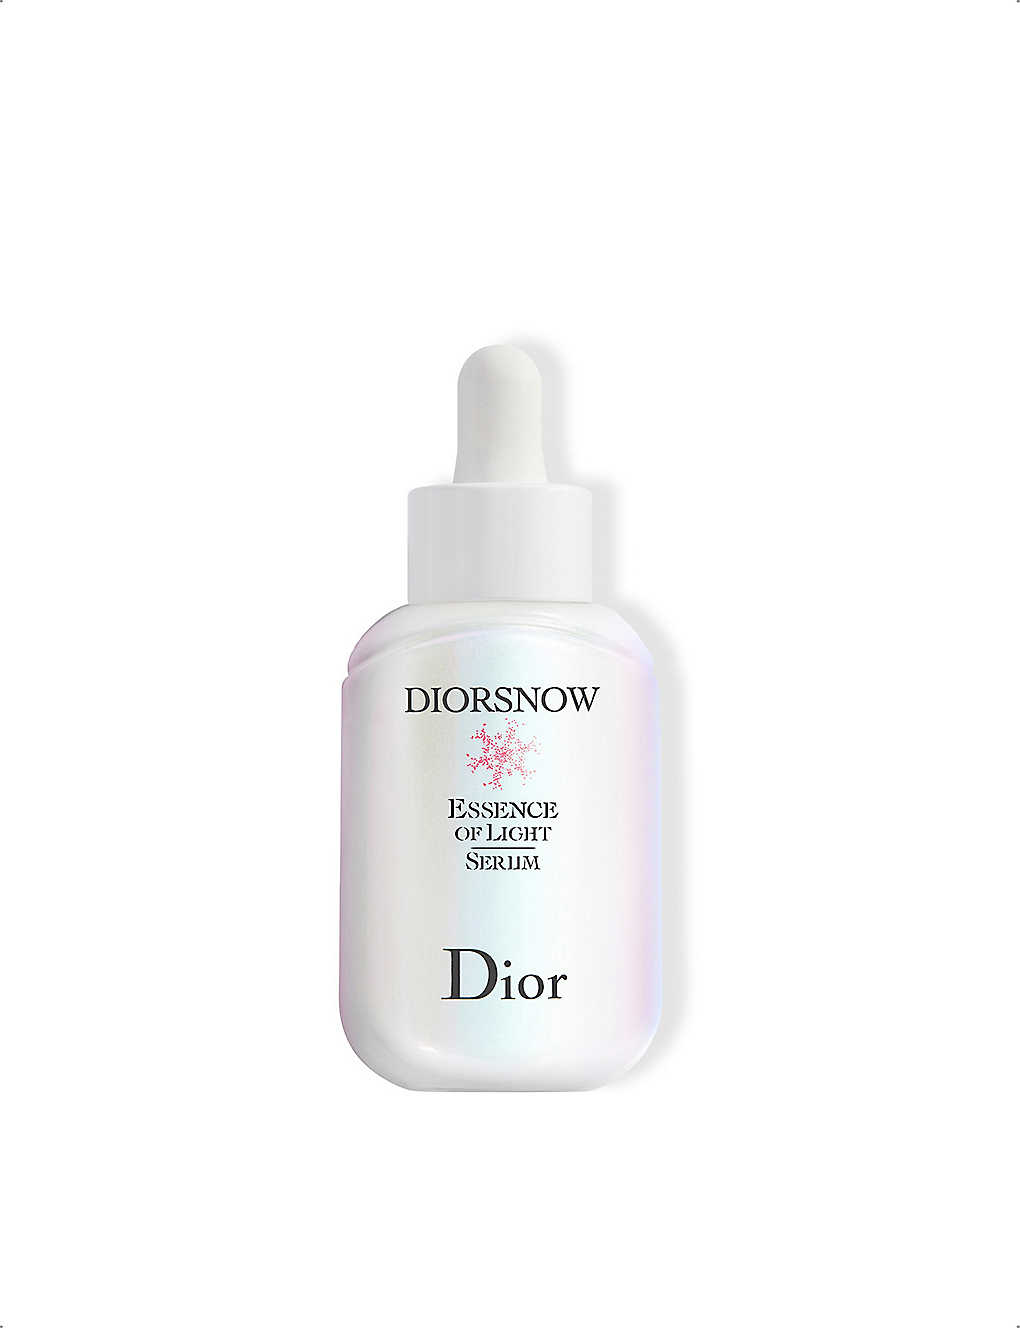 Shop Dior Snow Essence Of Light Brightening Milk Serum